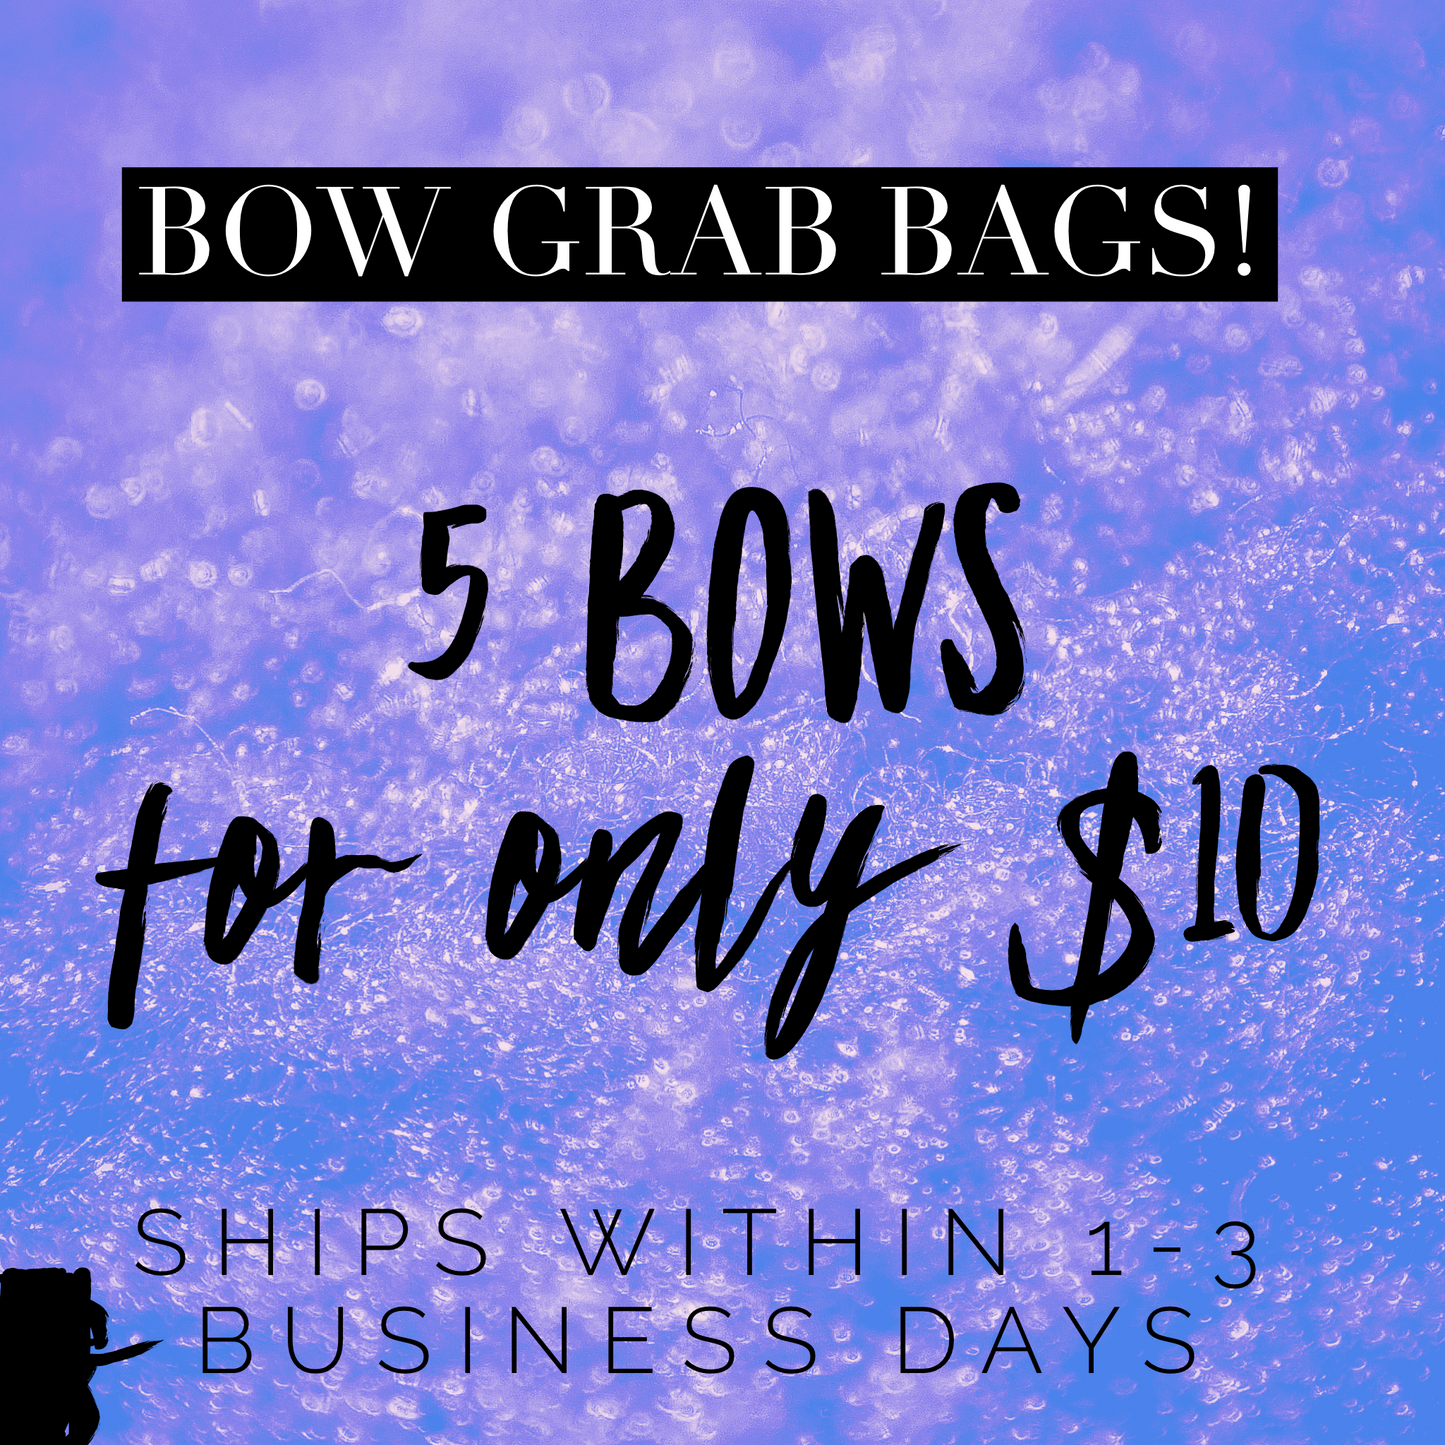 Bow grab bags!